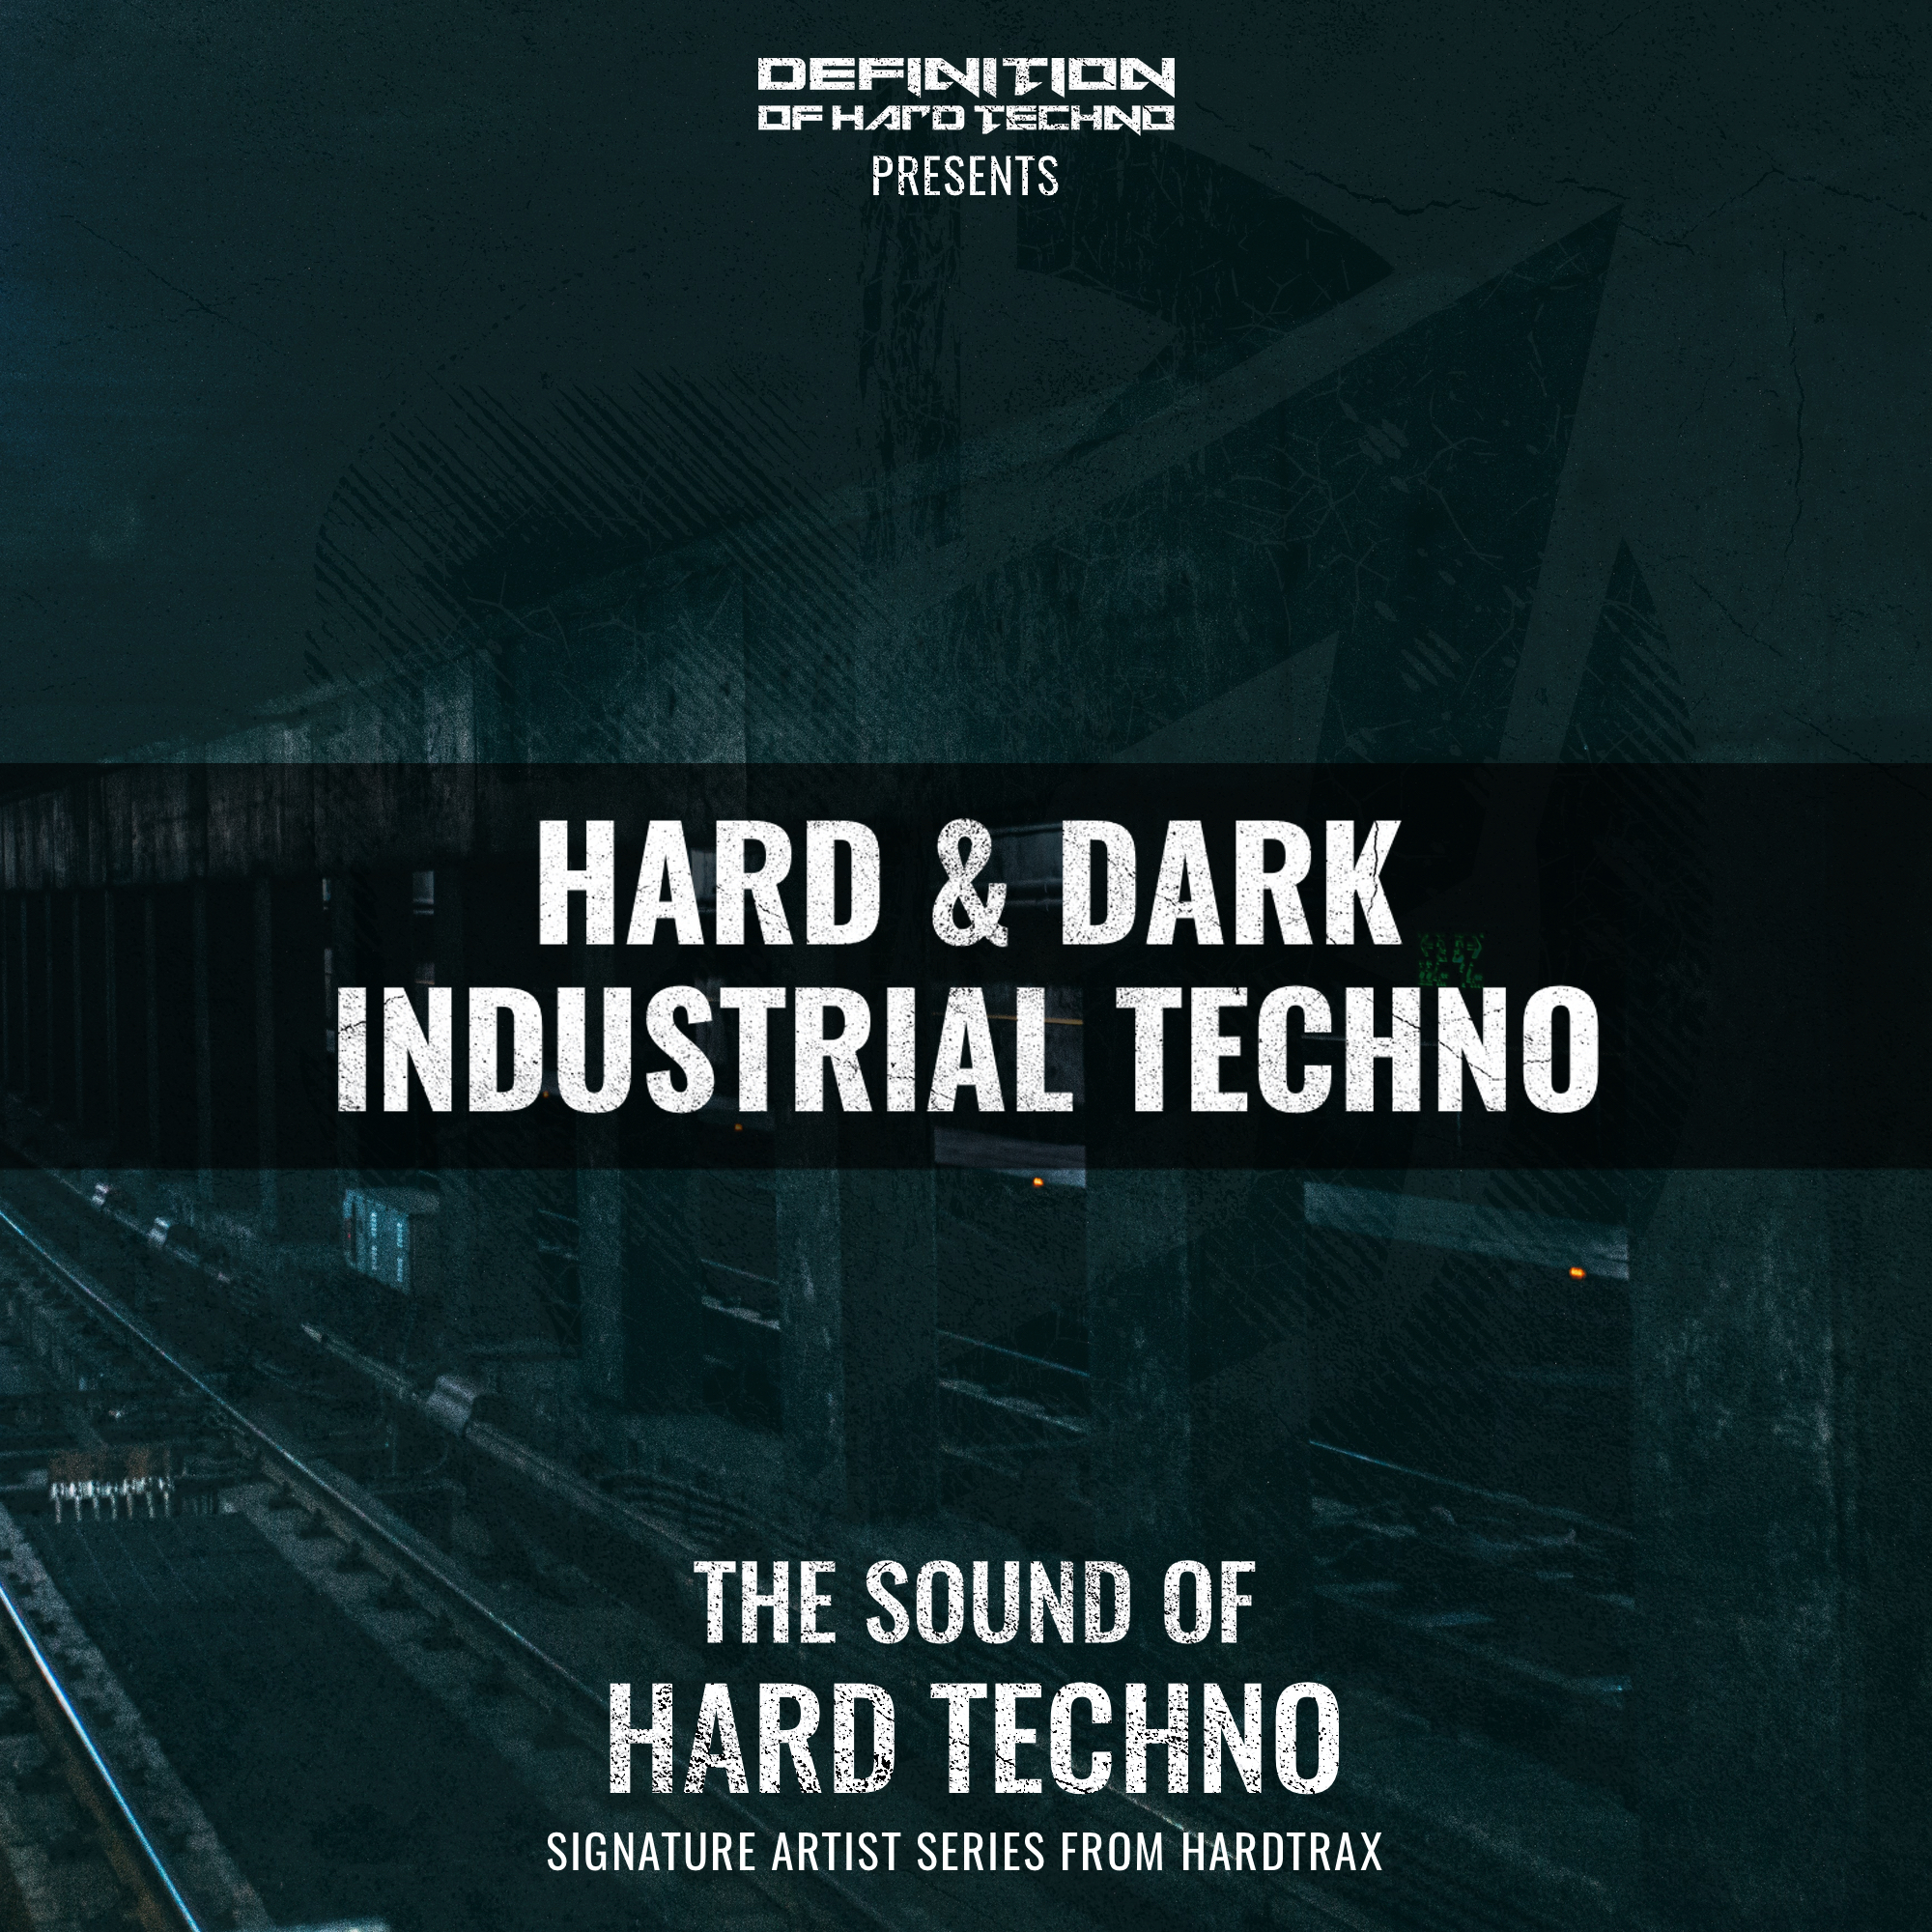 DOHT - Hard & Dark Industrial Techno by HardtraX